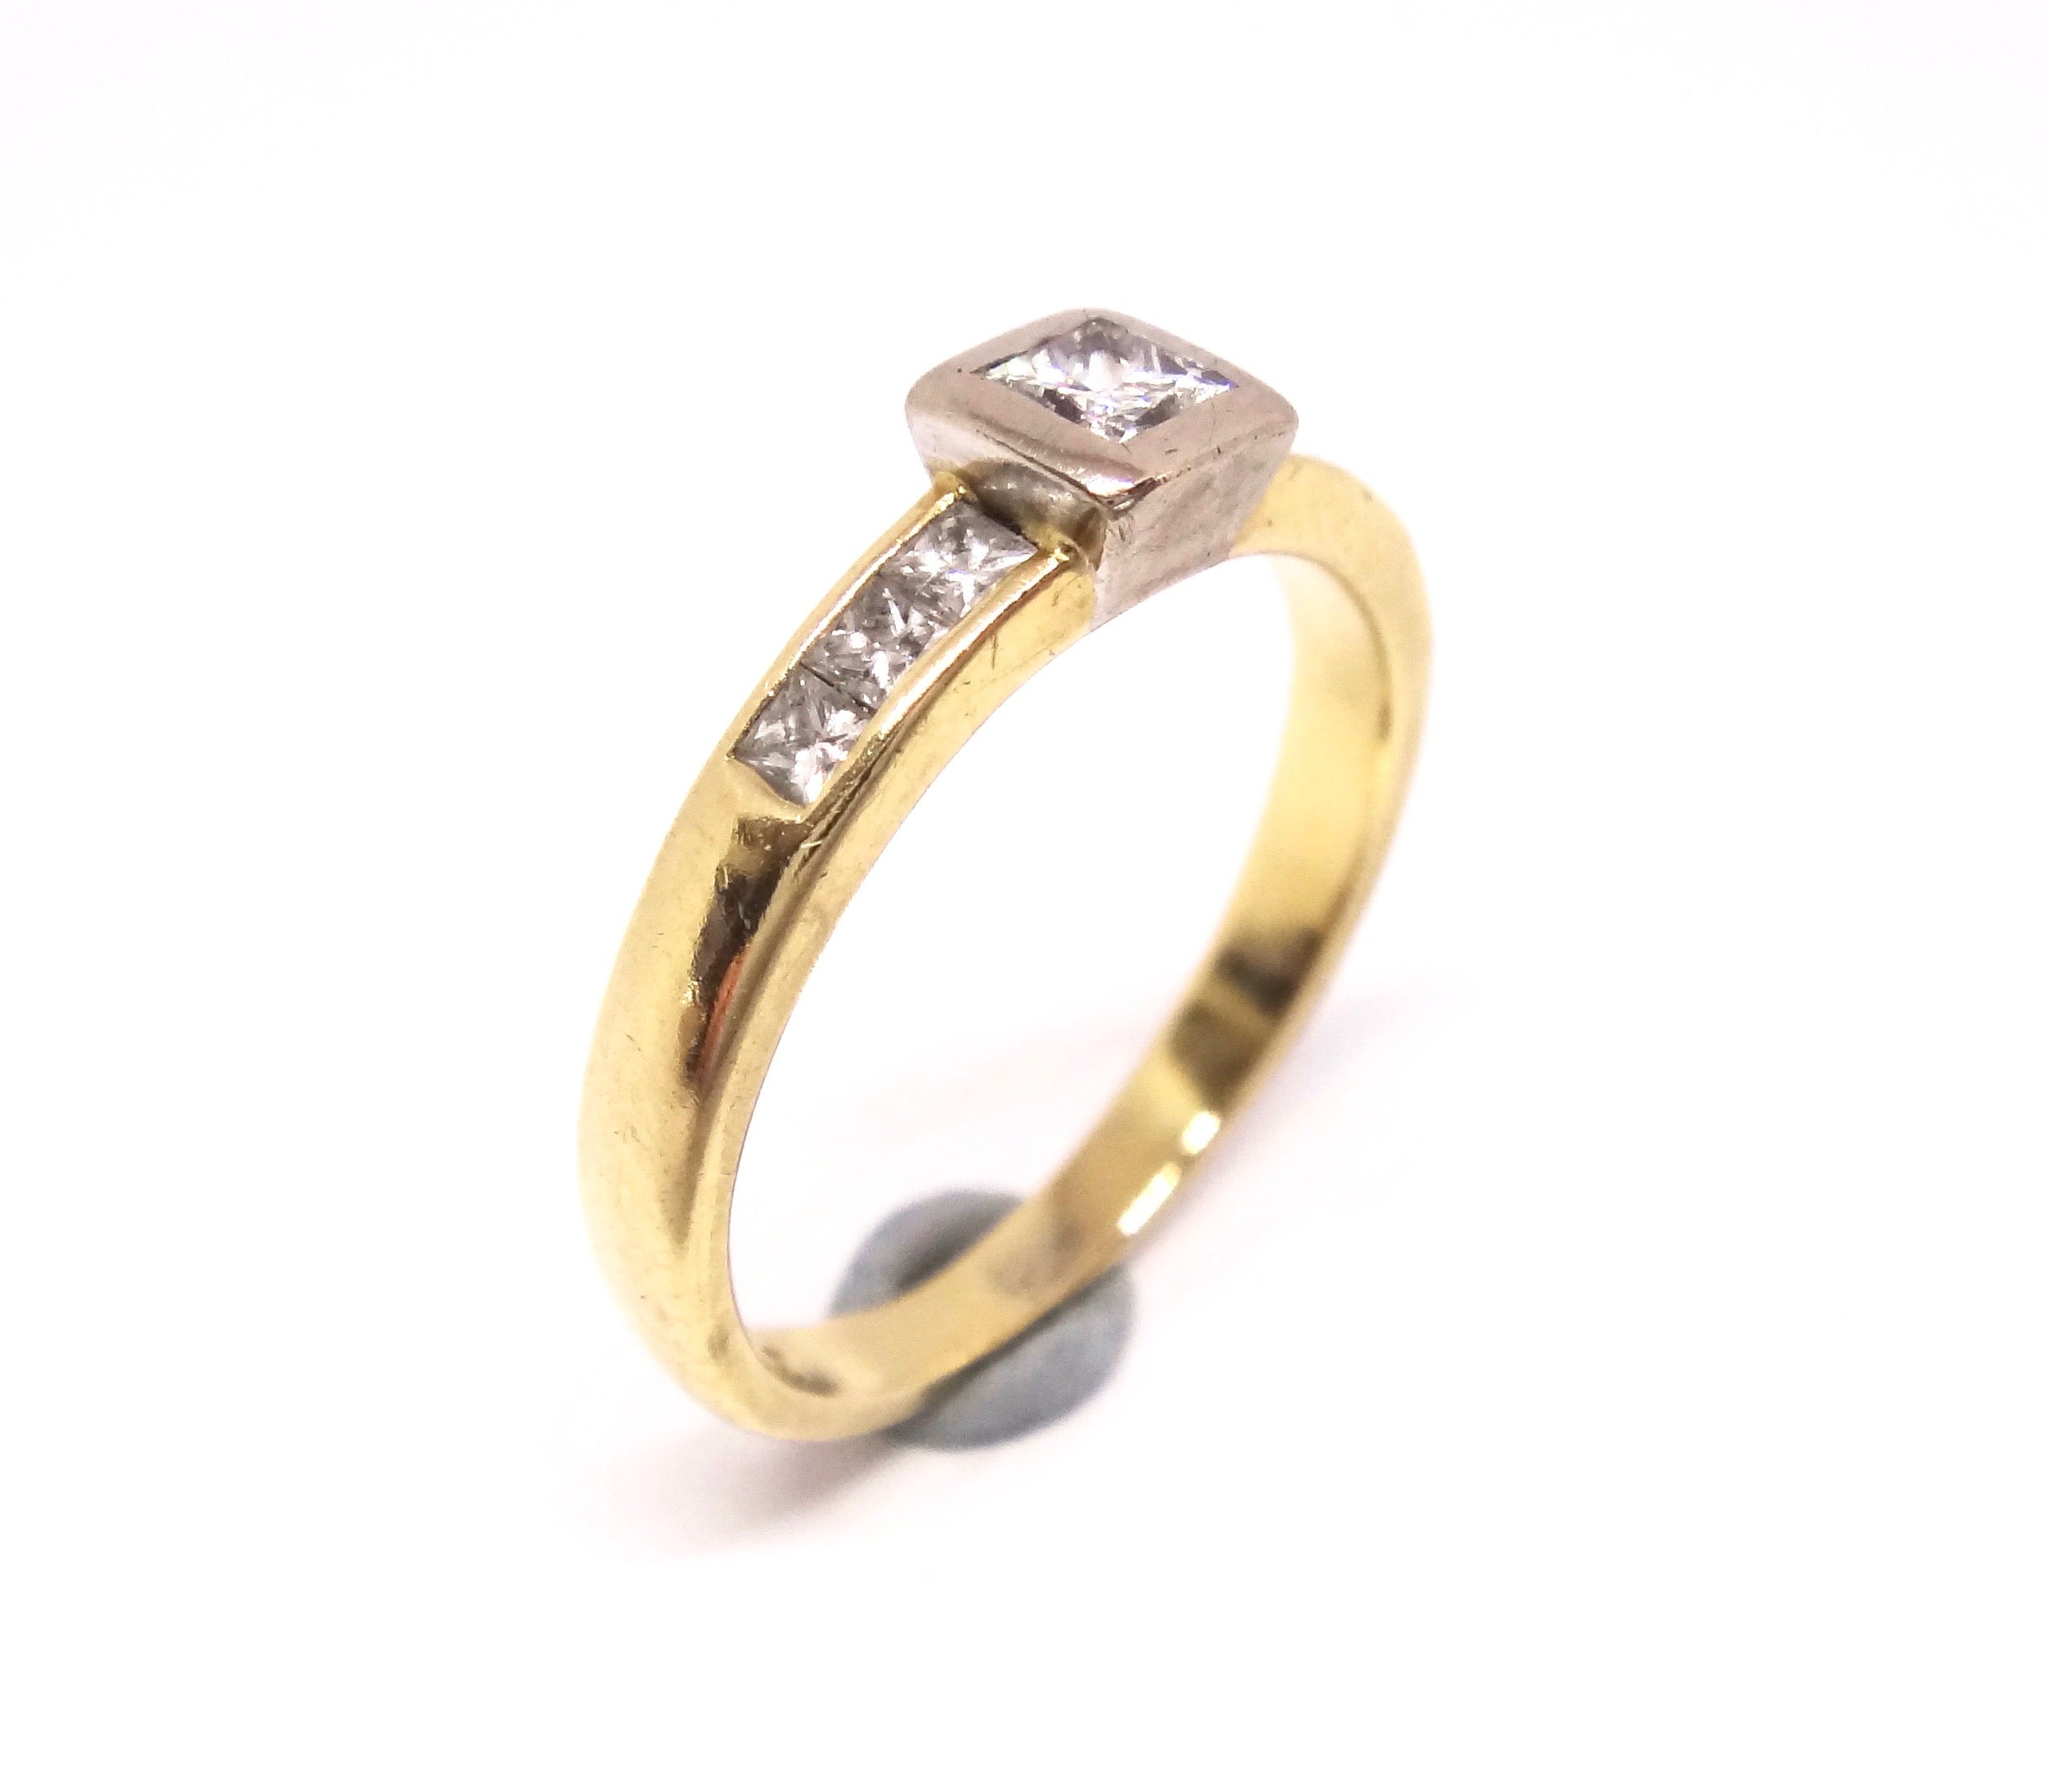 18CT Yellow GOLD & Multi Princess Cut DIAMOND Ring